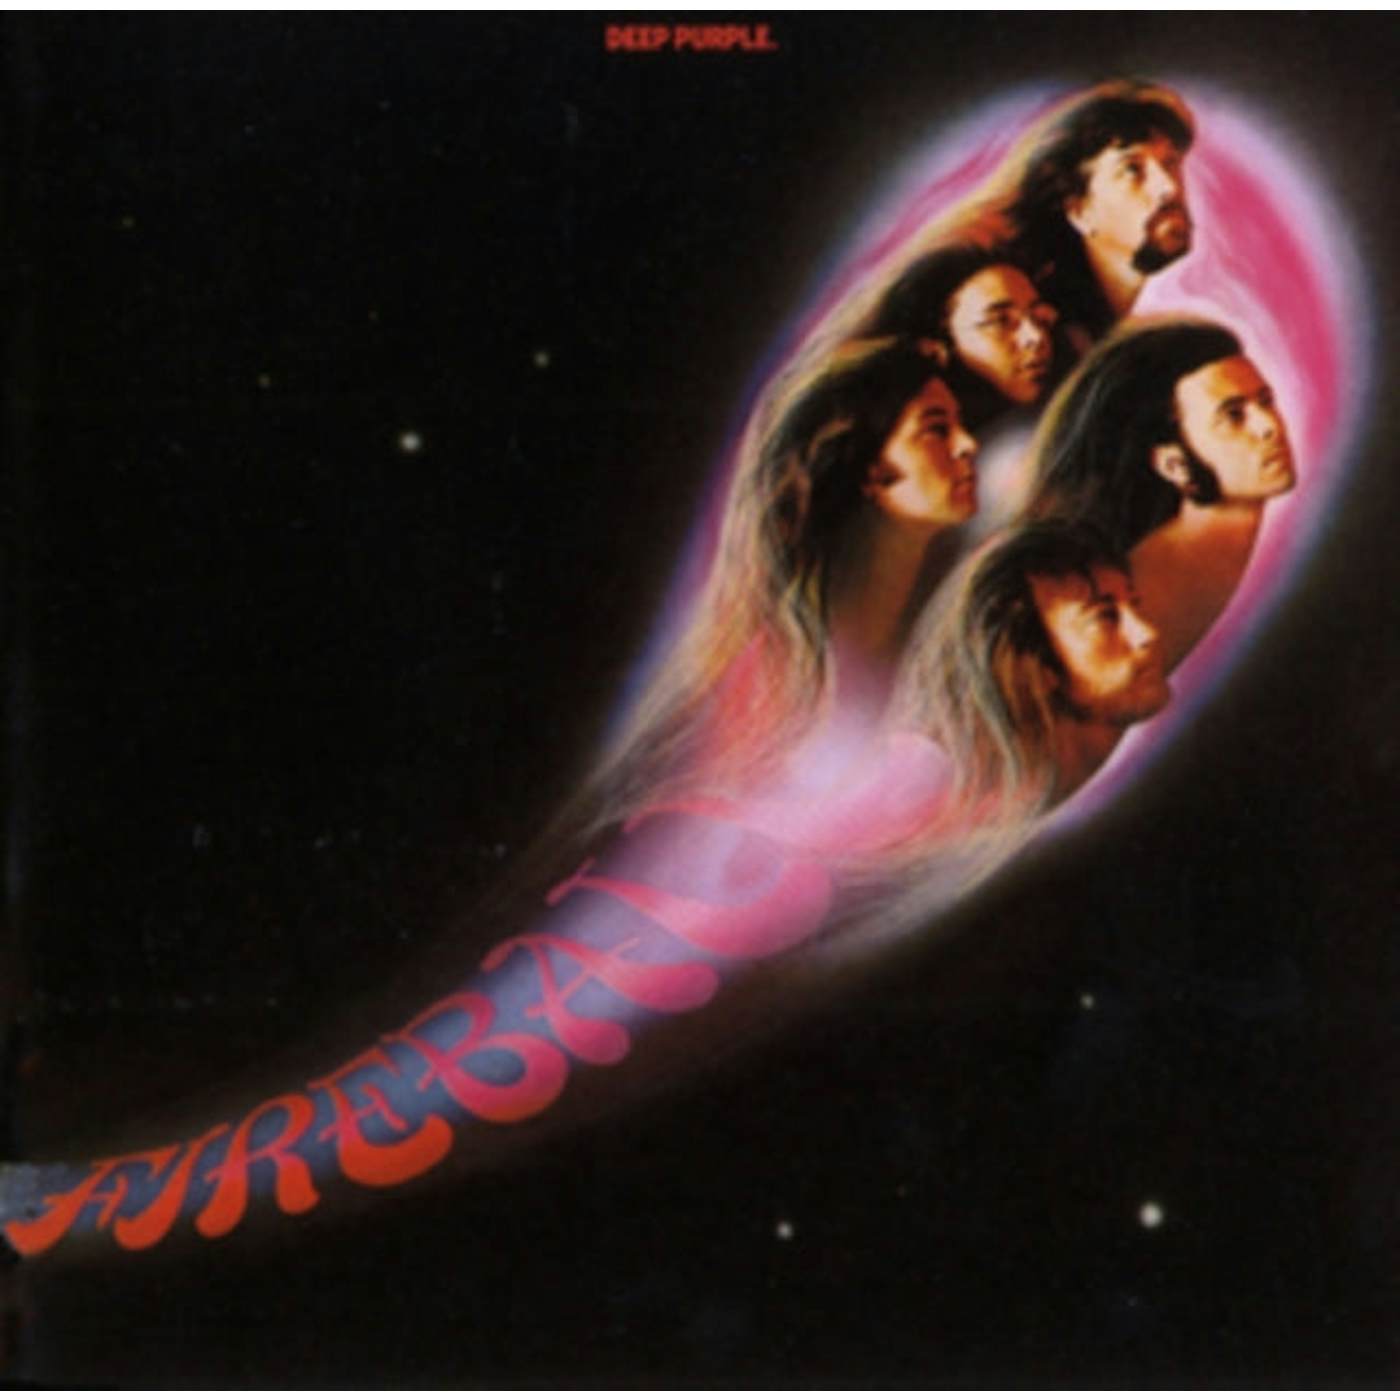 Deep Purple LP Vinyl Record - Fireball (2018  Remastered Version)